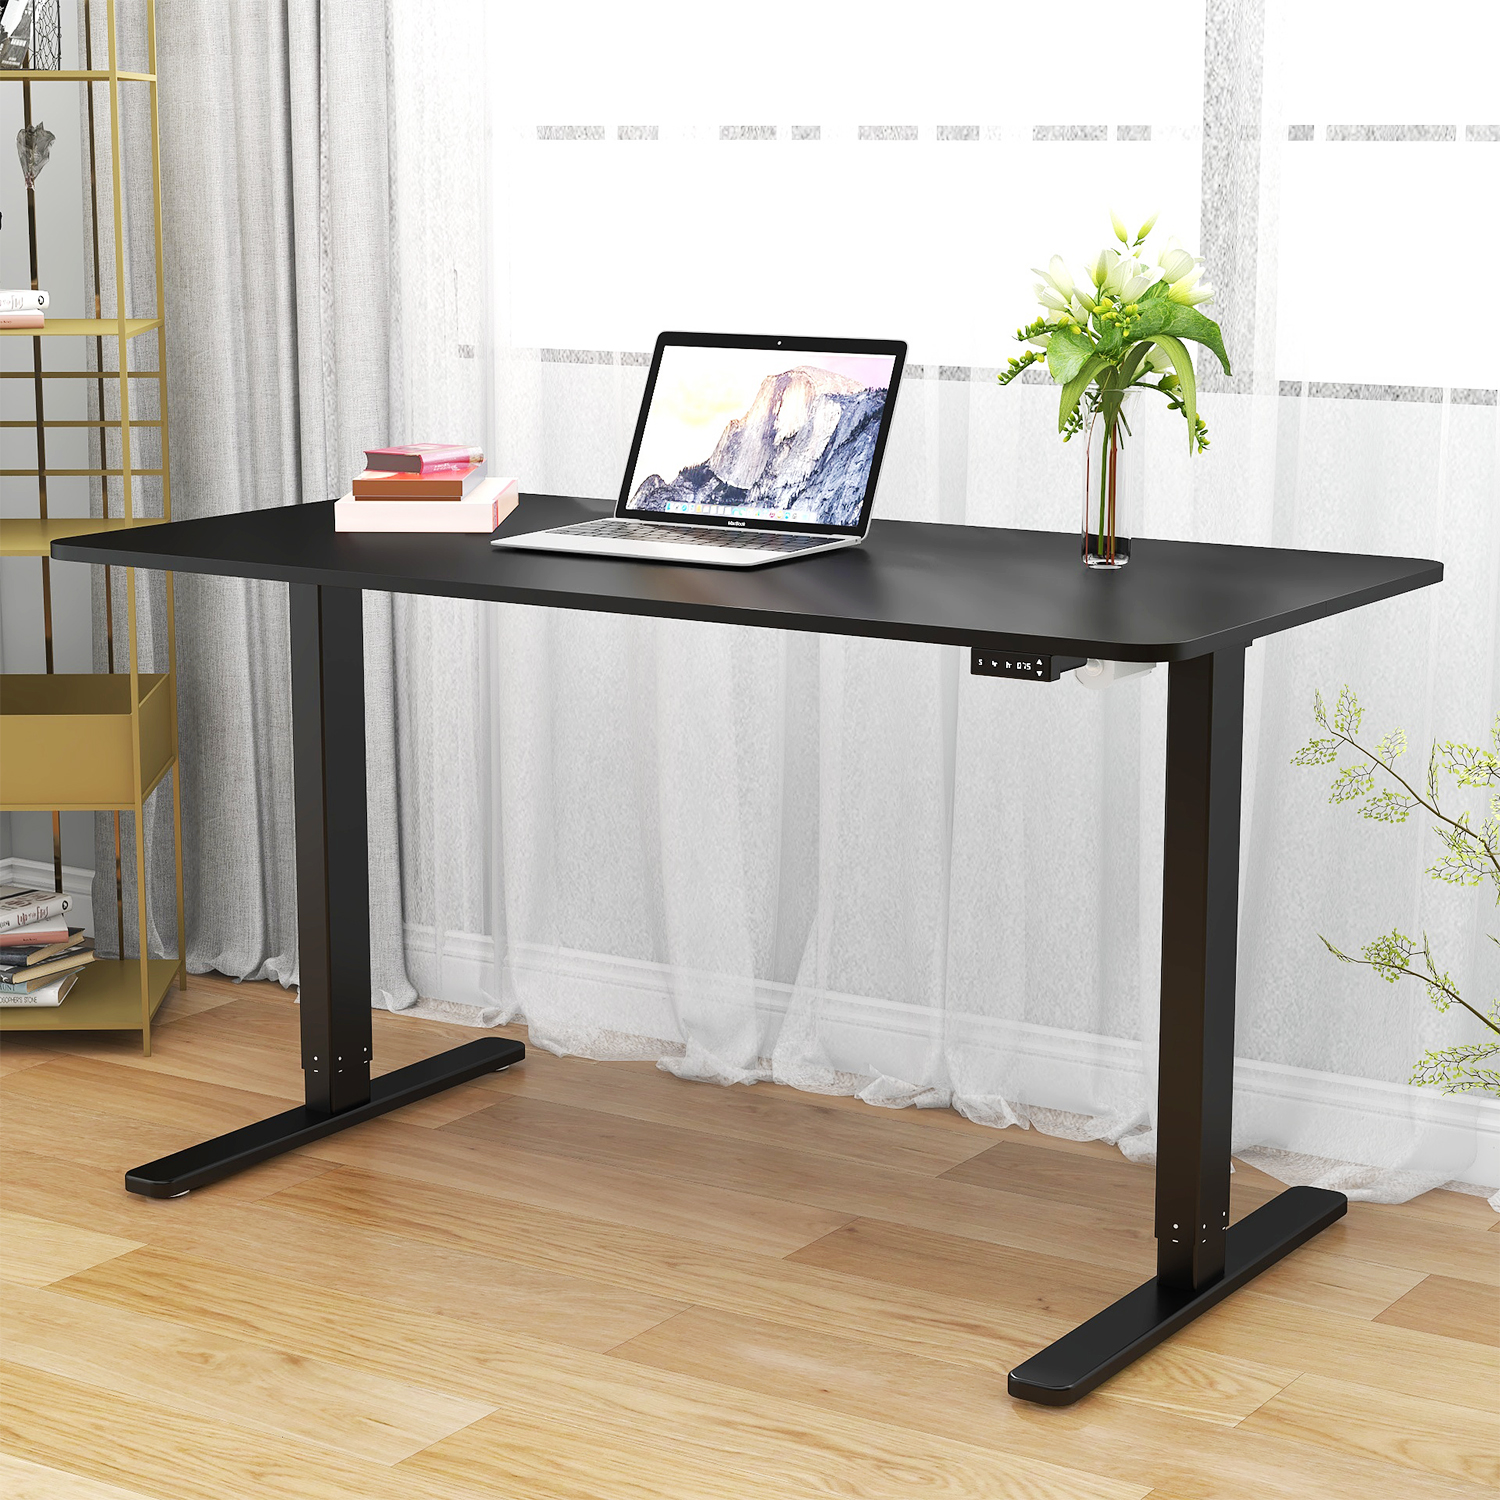 48" Electric Standing Desk with Height Adjustable $199.99 @Walmart